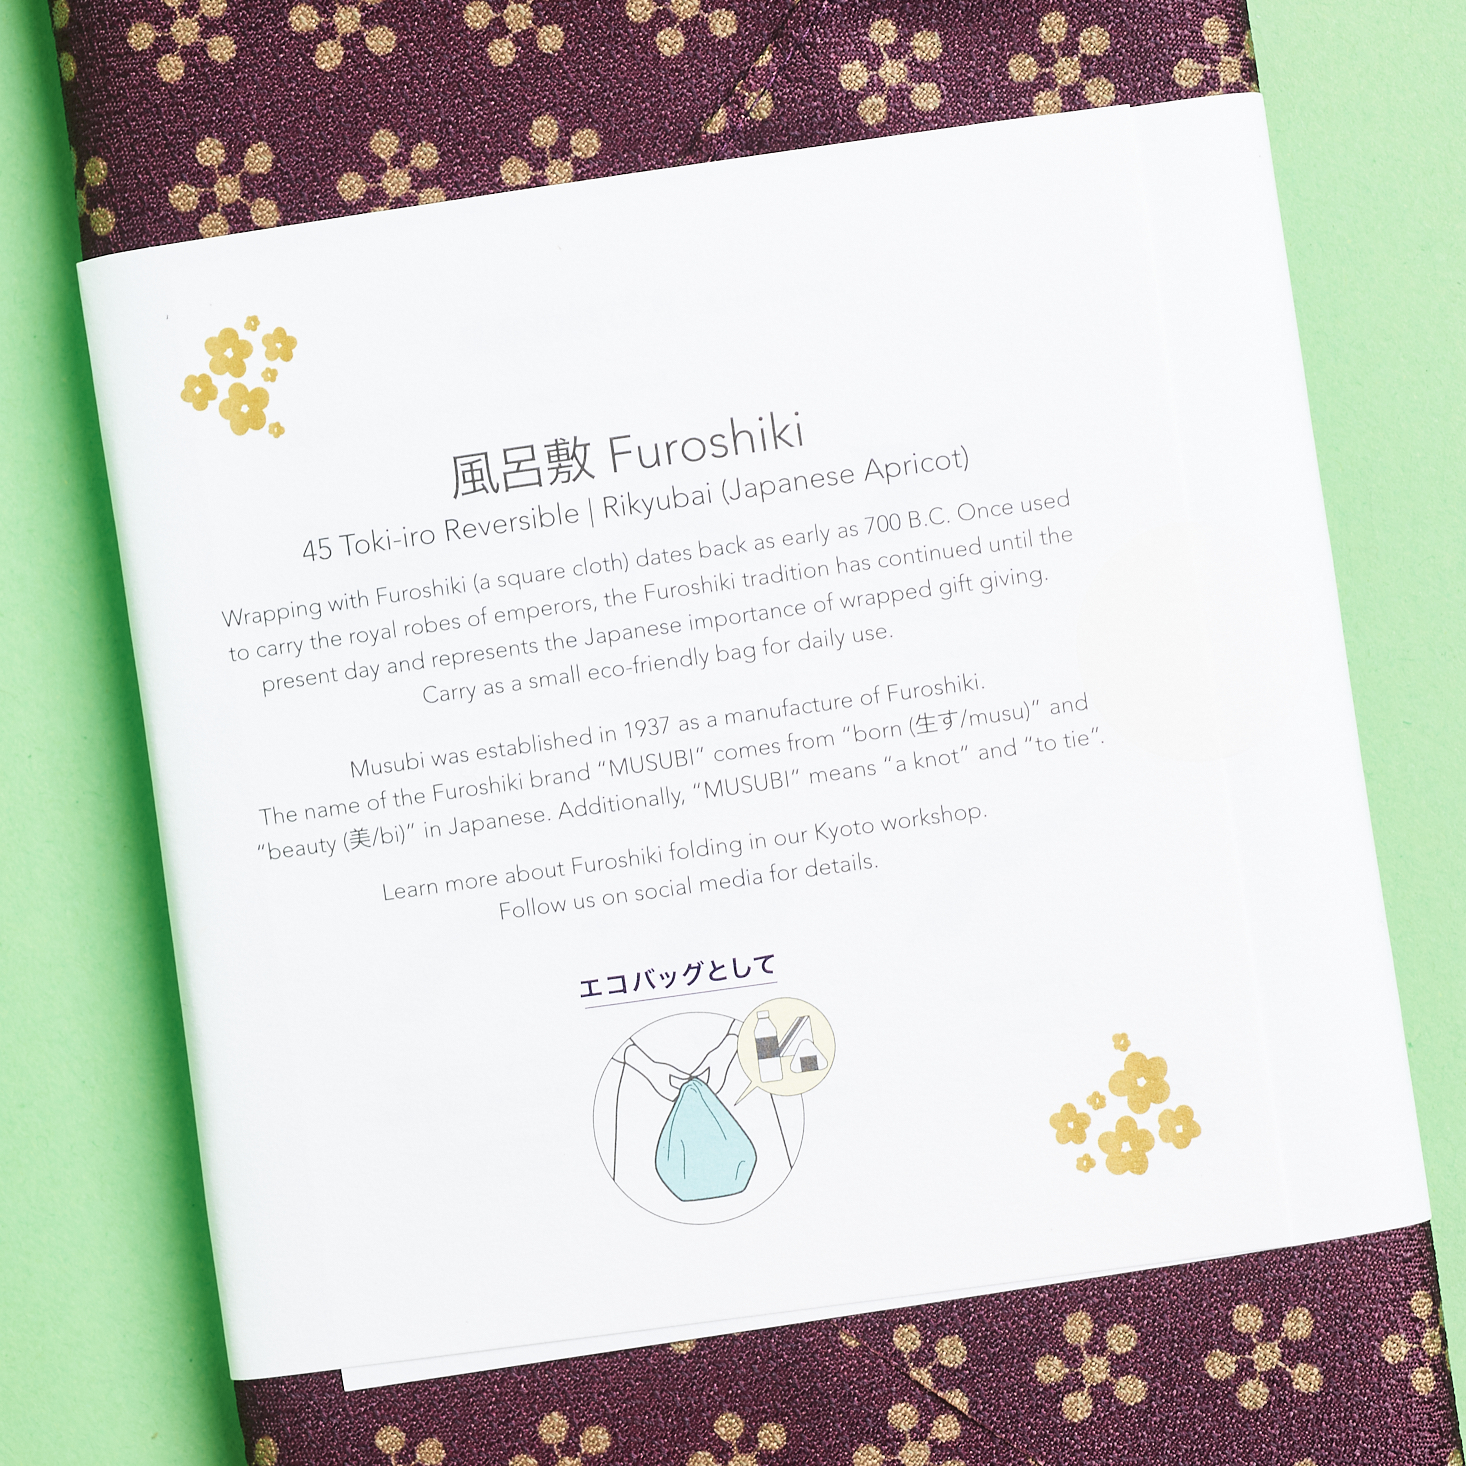 Packaging of Furoshiki kit from Journee Box Kyoto